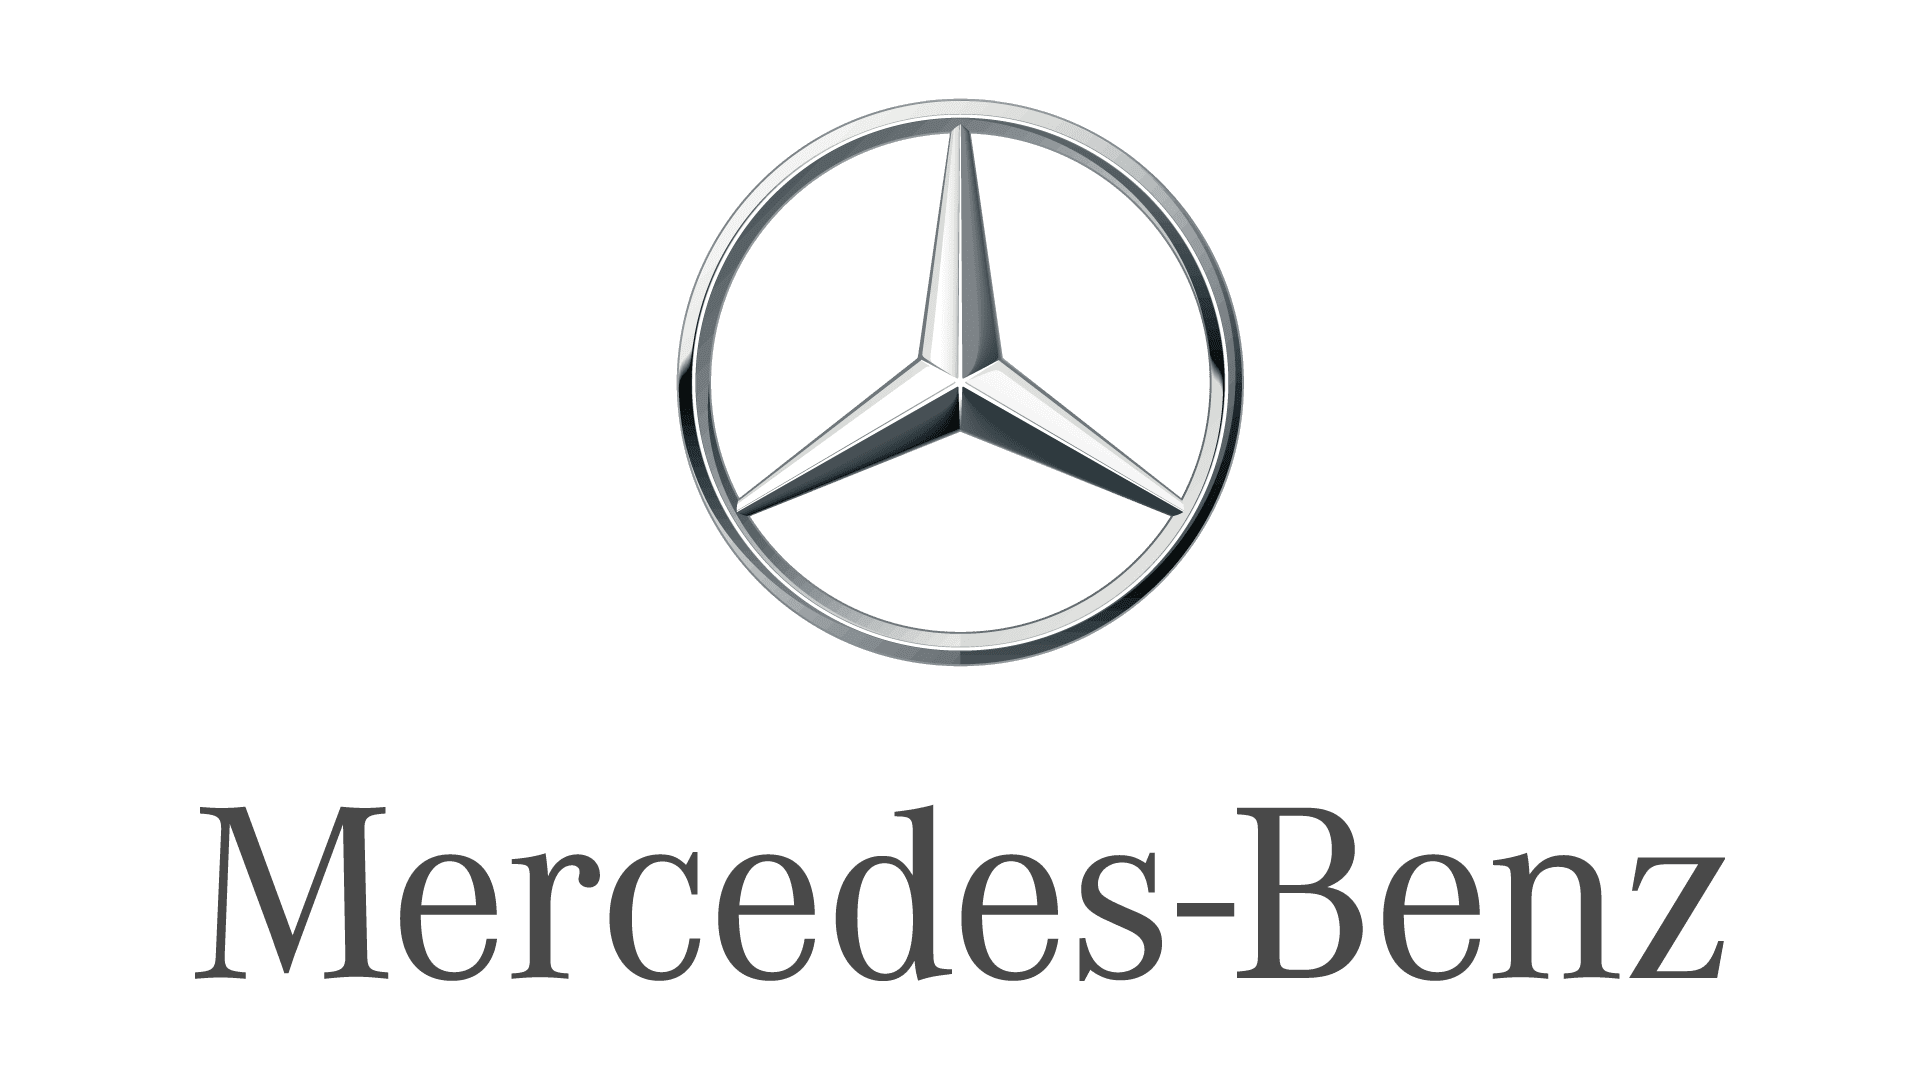 Комфорт Mercedes-Benz GLC Купе Пакети обладнання функцій комфорту #1